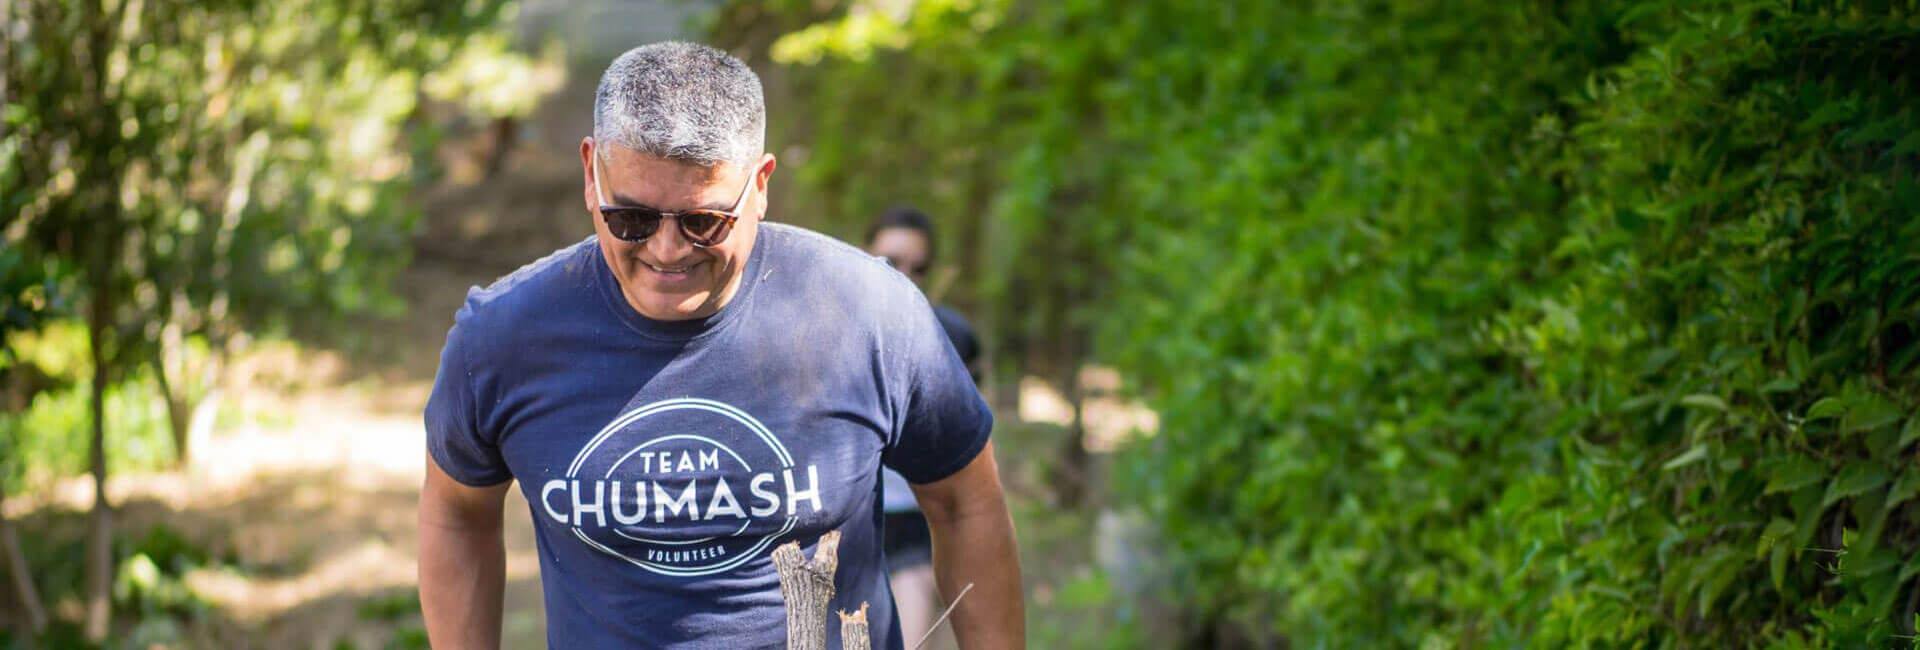 Chumash Careers - Philanthropy